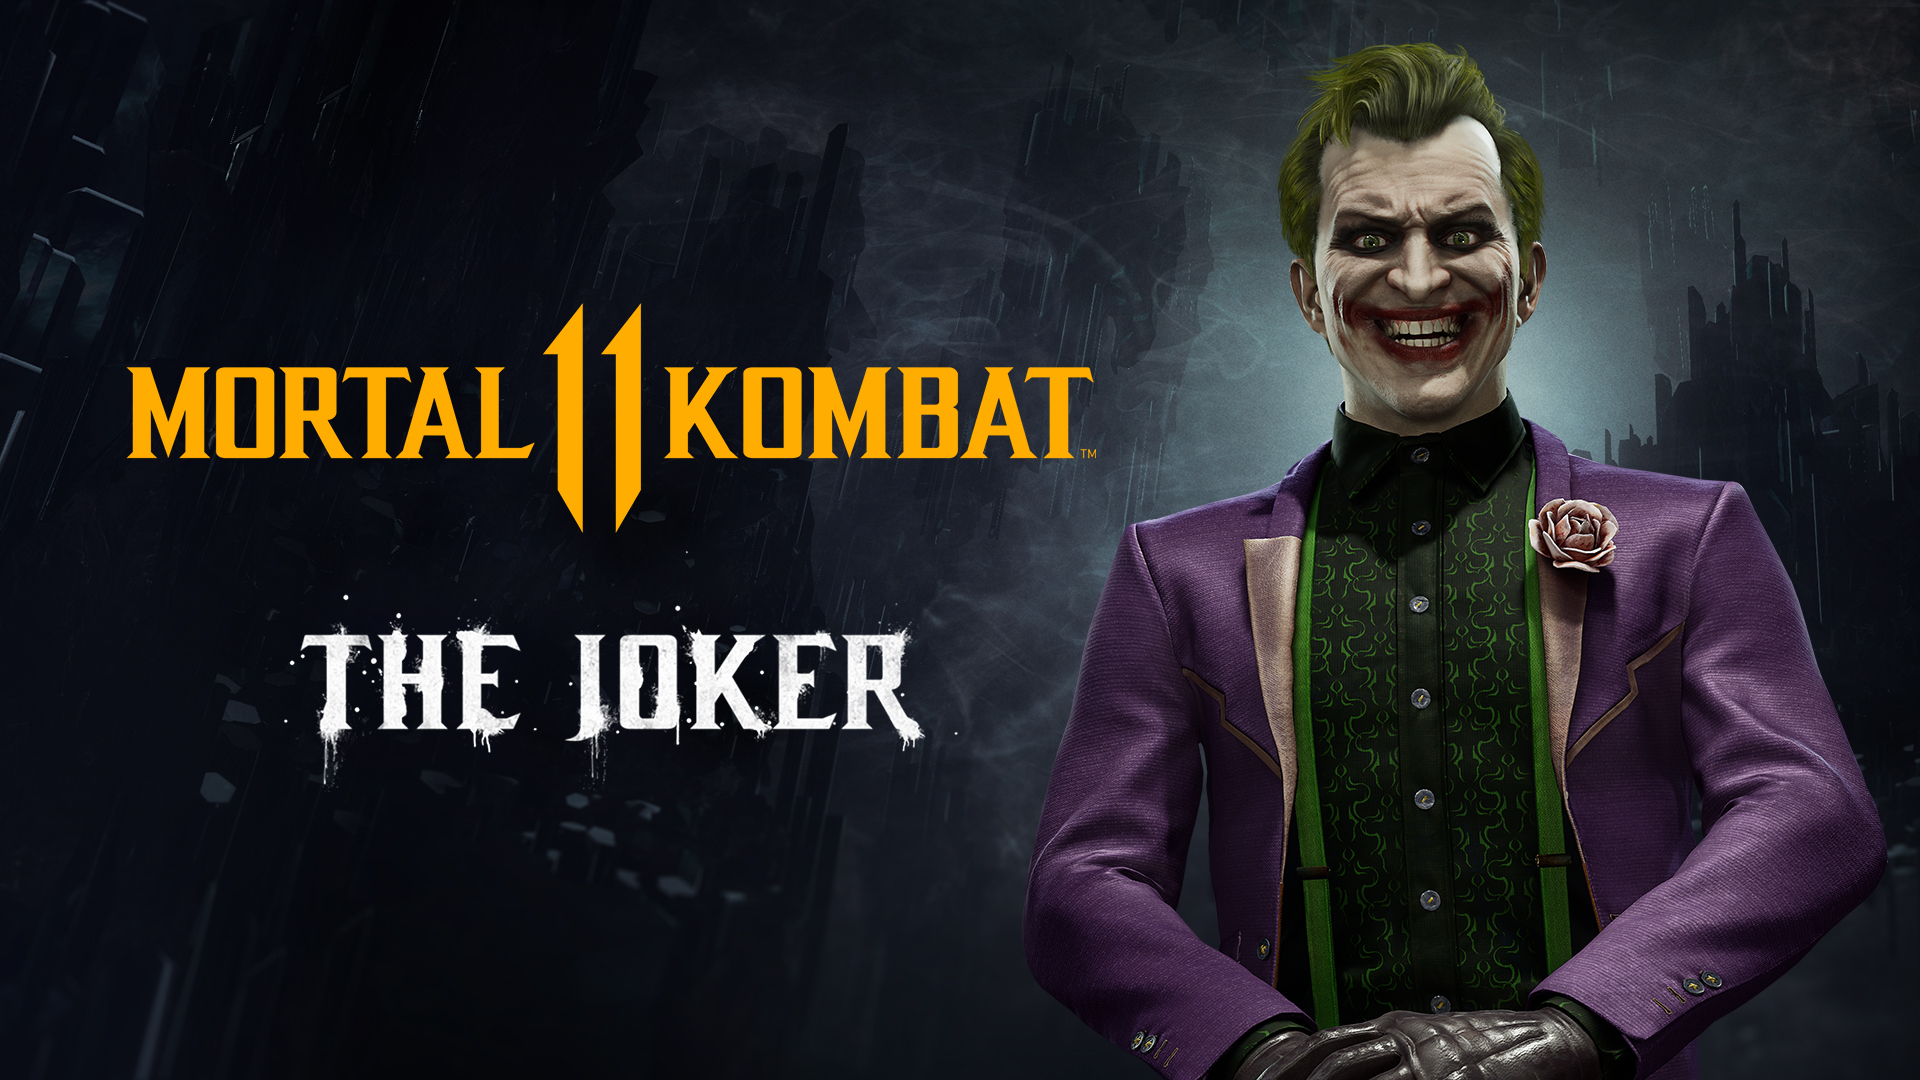 The Joker/Mortal Kombat 11/Nintendo Switch/Nintendo